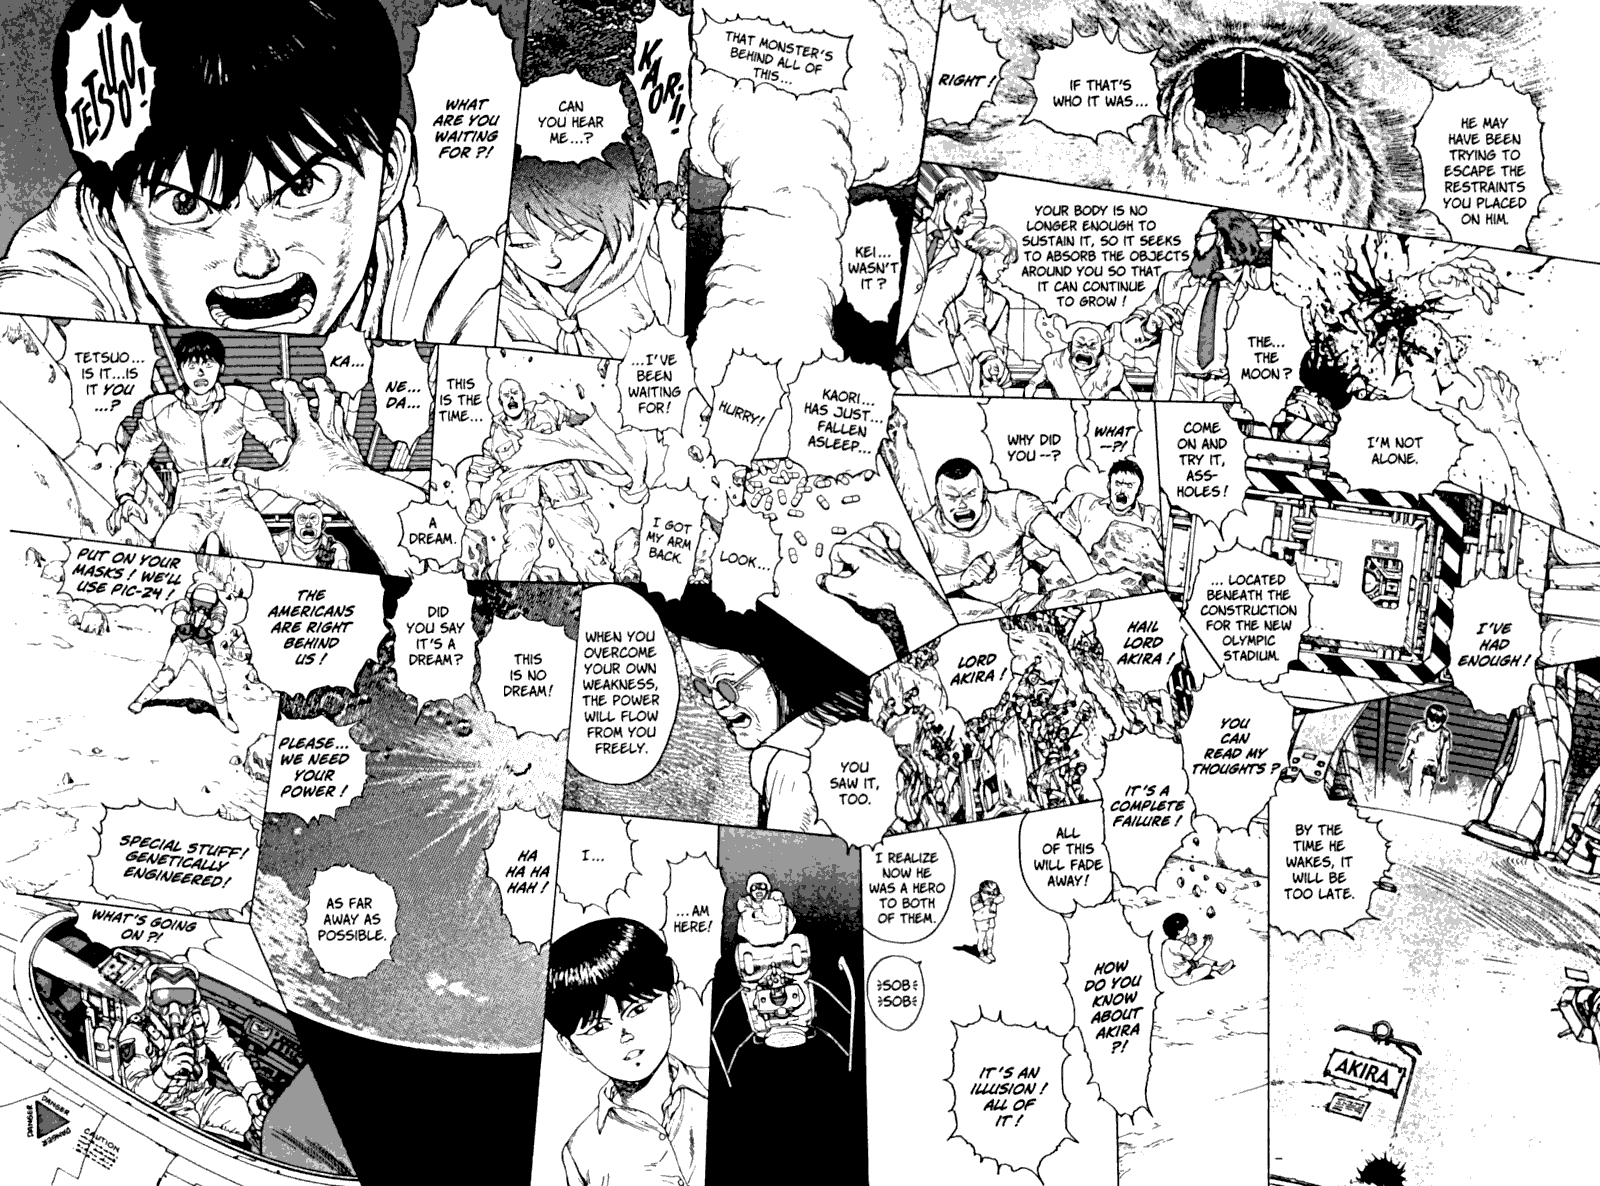 page 334 of akira volume 6 manga at read graphic novel online